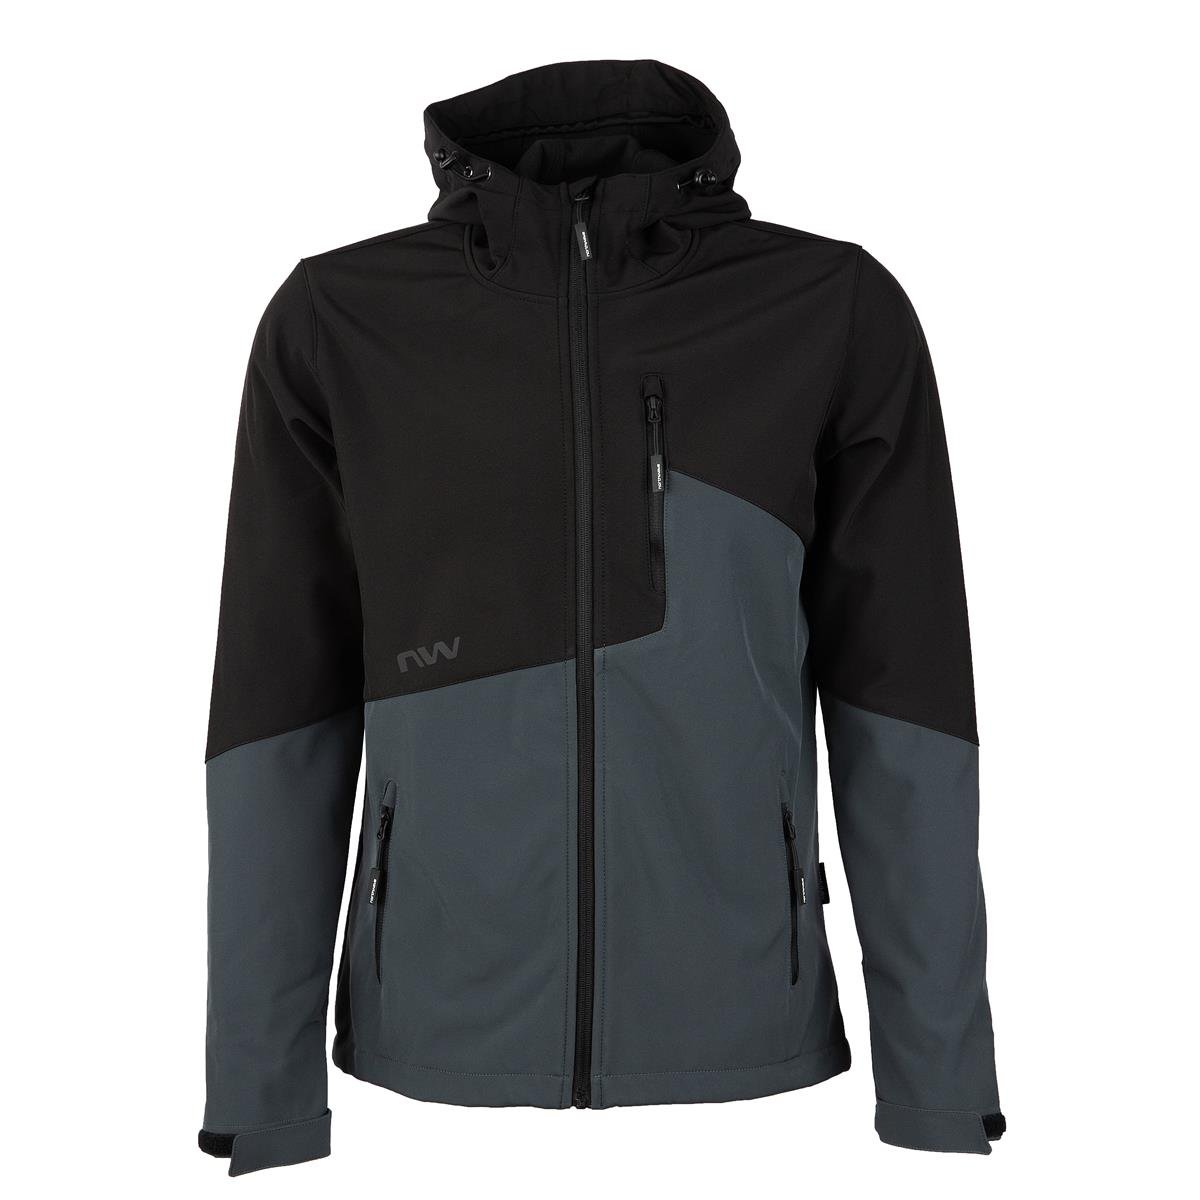 Northwave MTB Jacket Enduro Softshell Black/Anthracite | Maciag Offroad